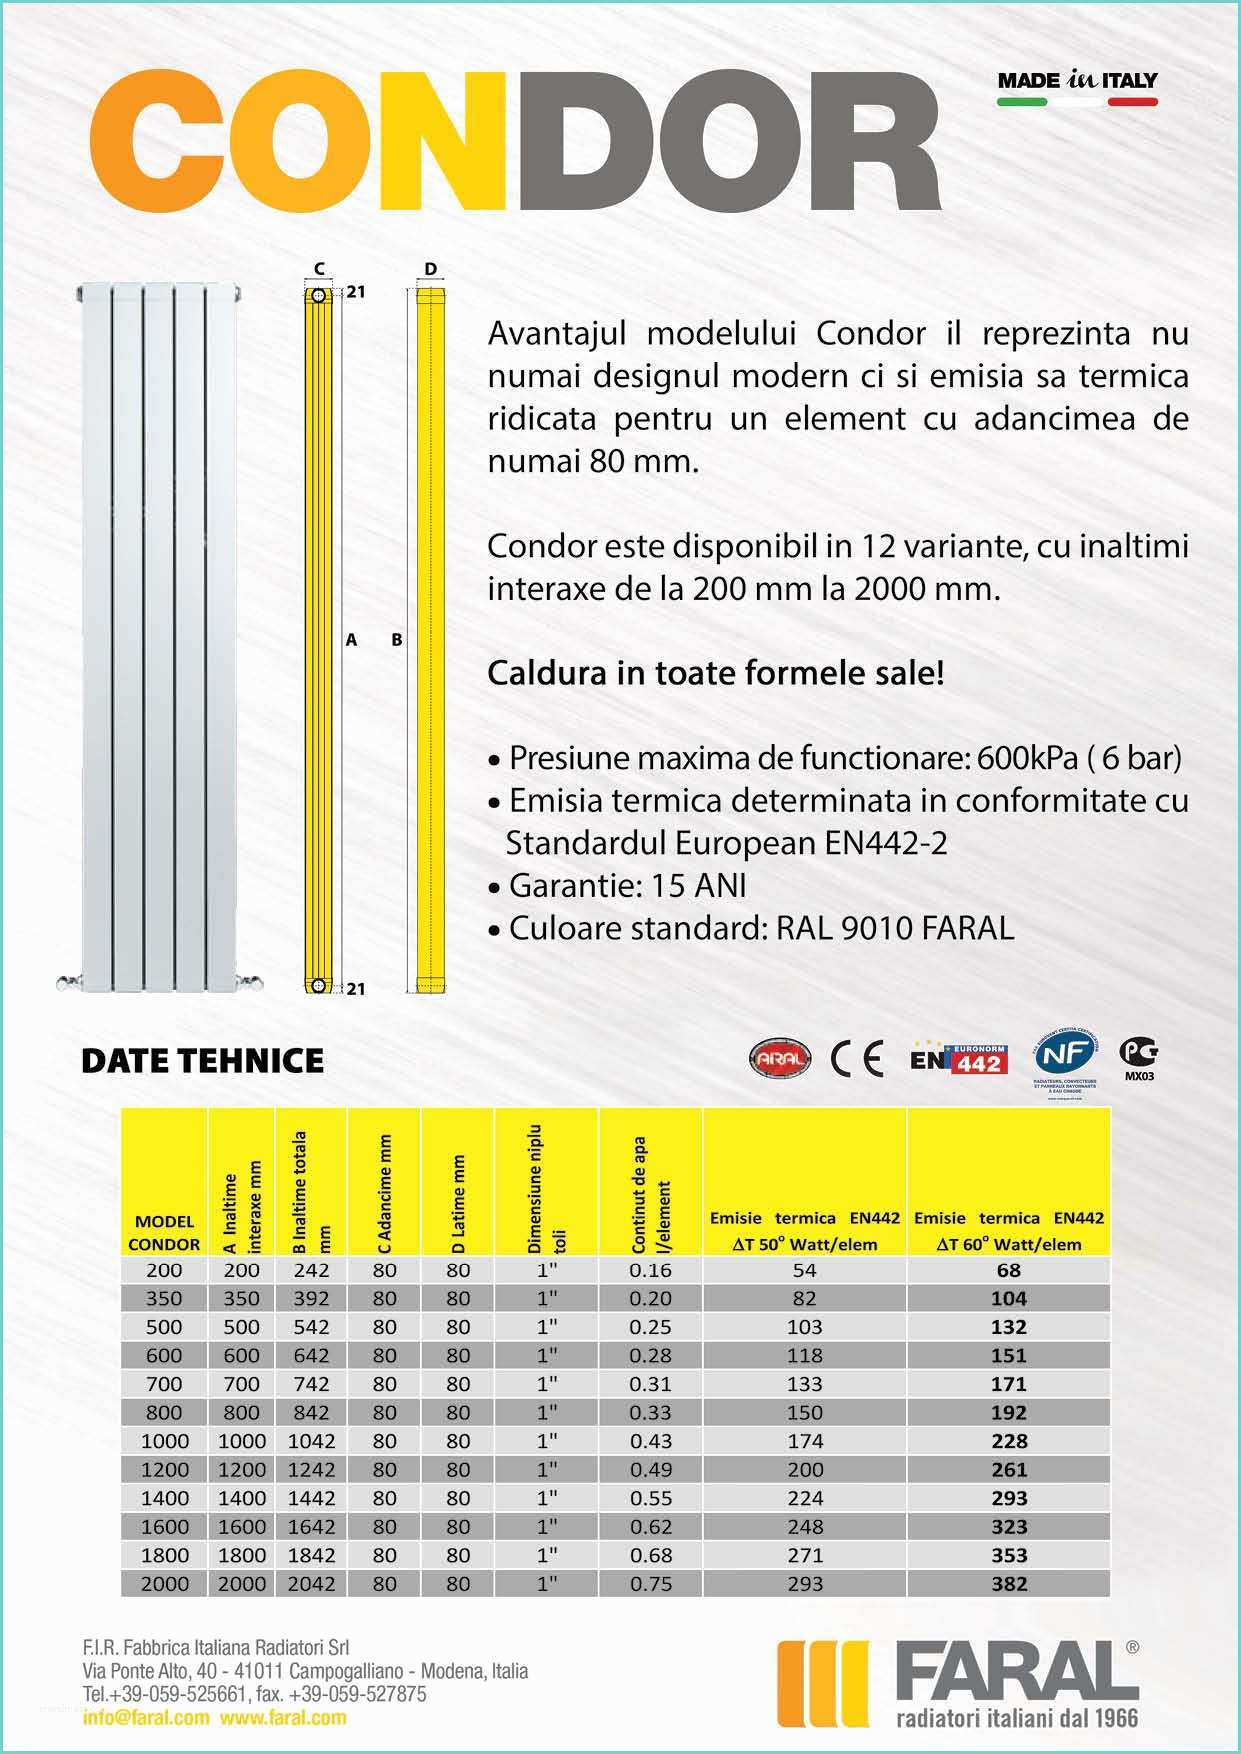 Ariston Clas Premium Evo 24 Manual Element Pentru Calorifer Aluminiu Faral Condor 1600